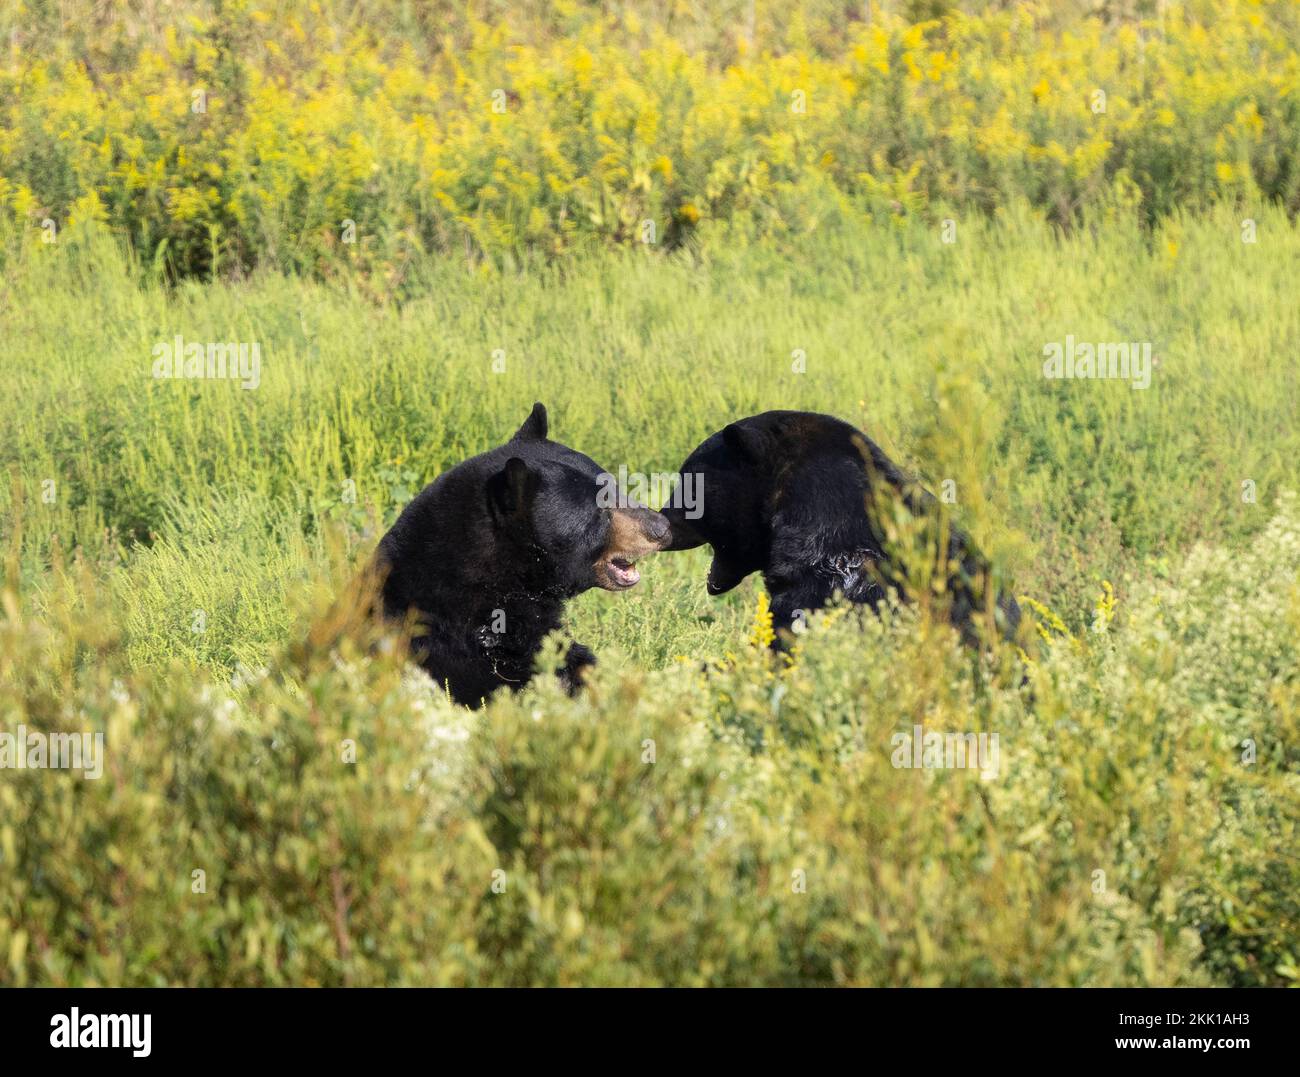 American Black Bears (Ursus americanus) fighting in a soy field Stock Photo